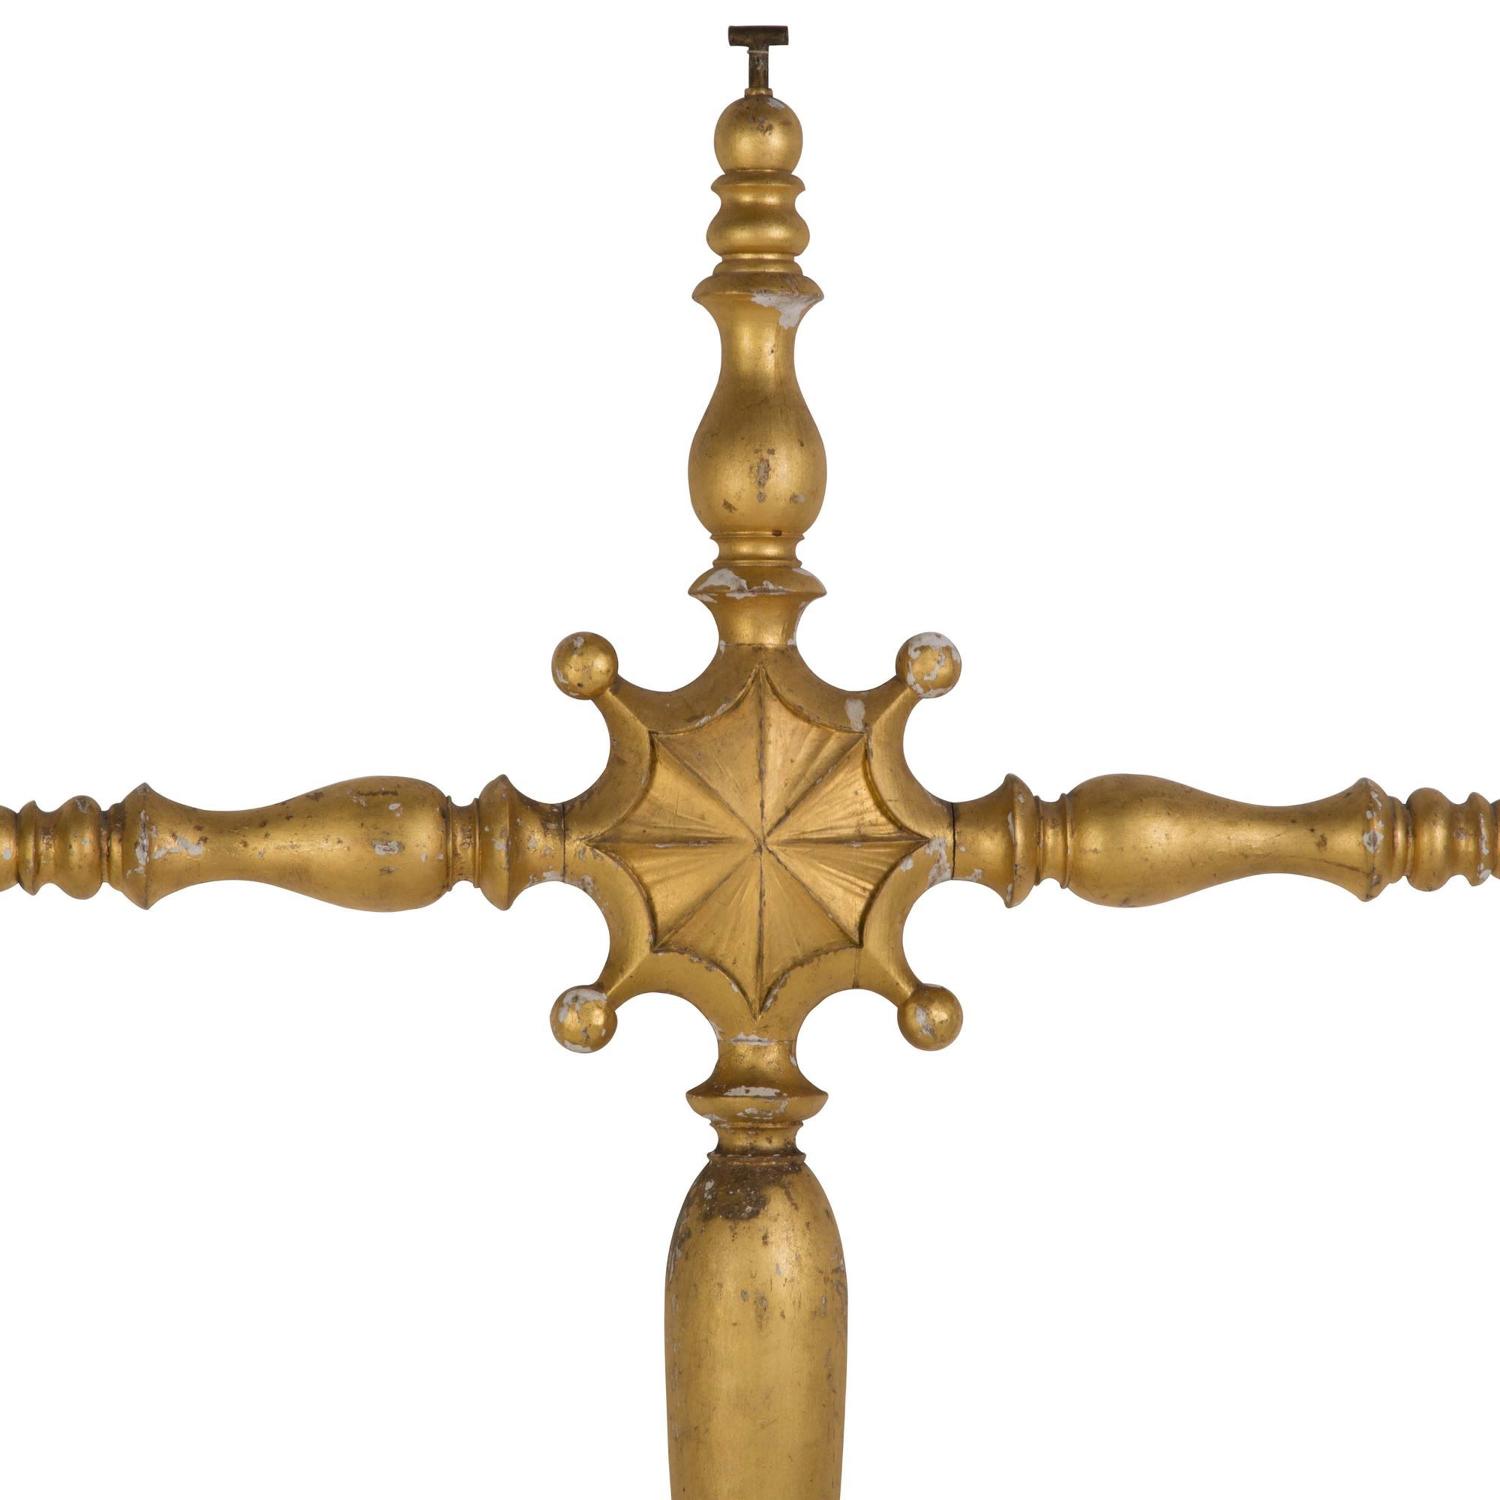 Italian 18th century gilded Cross - circa 1750